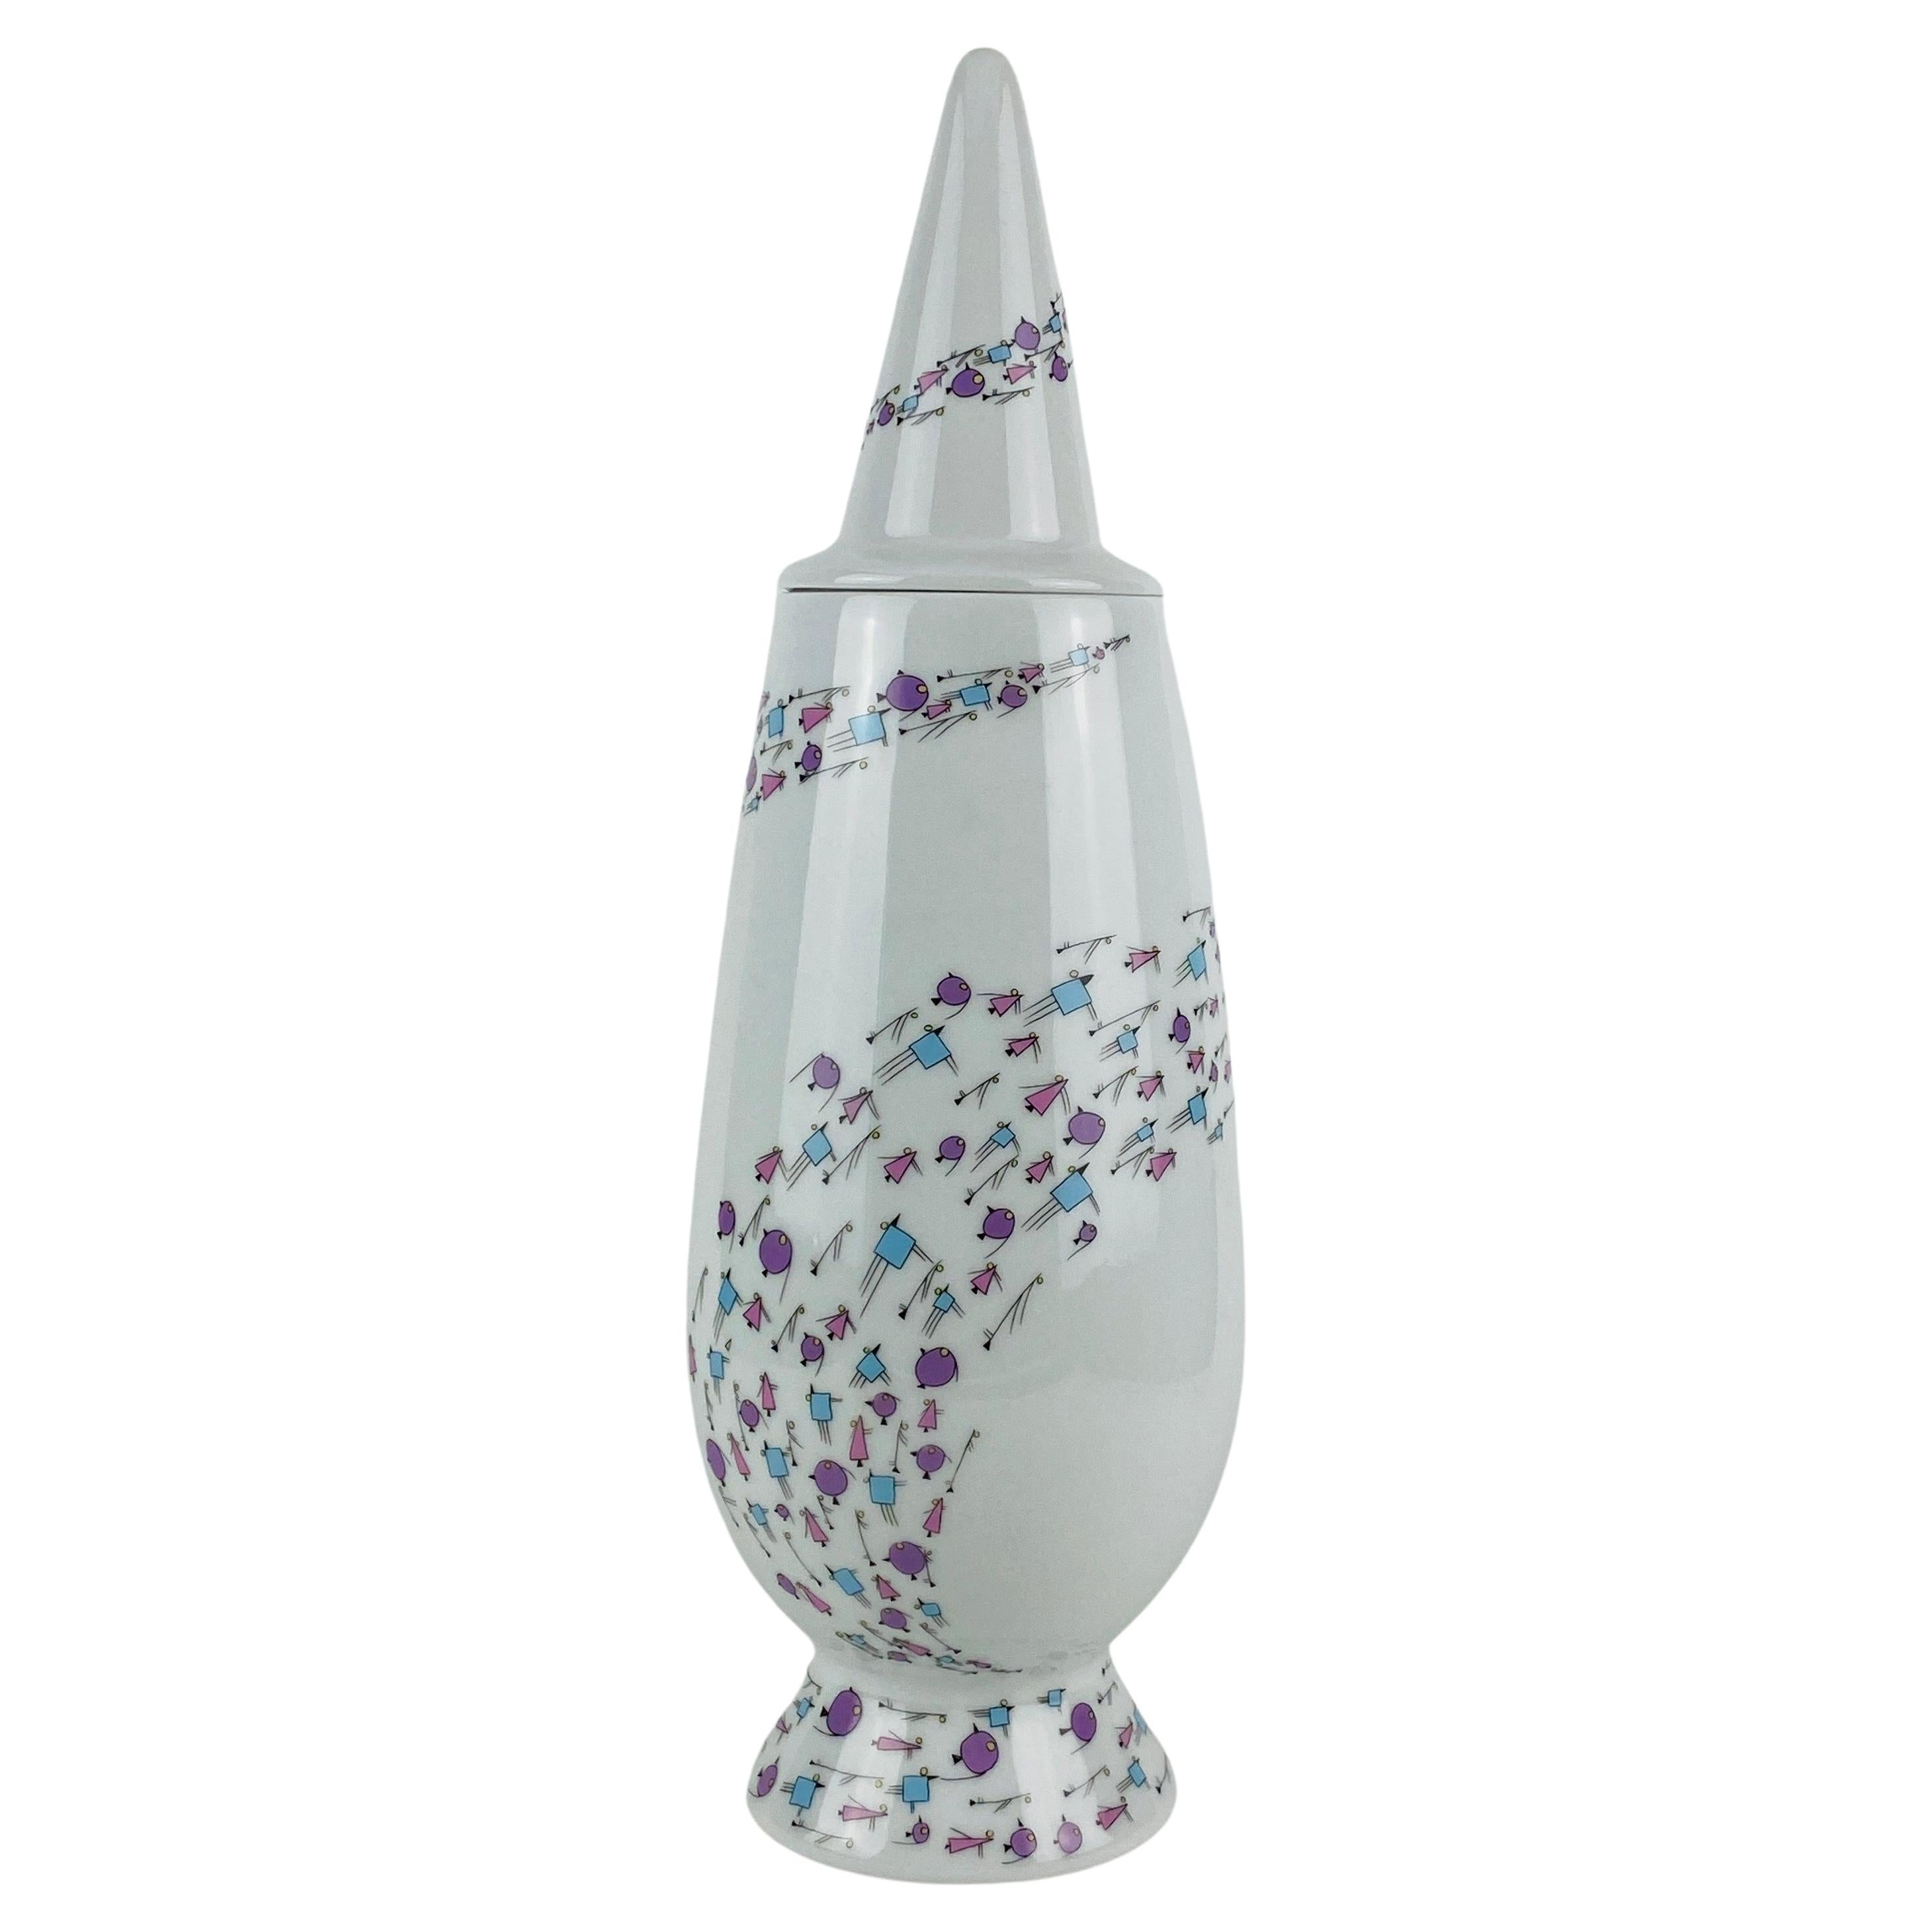 Alessi Tendentse Vase by Giorgio Rava for A. Mendini 100% Make-Up Series N69